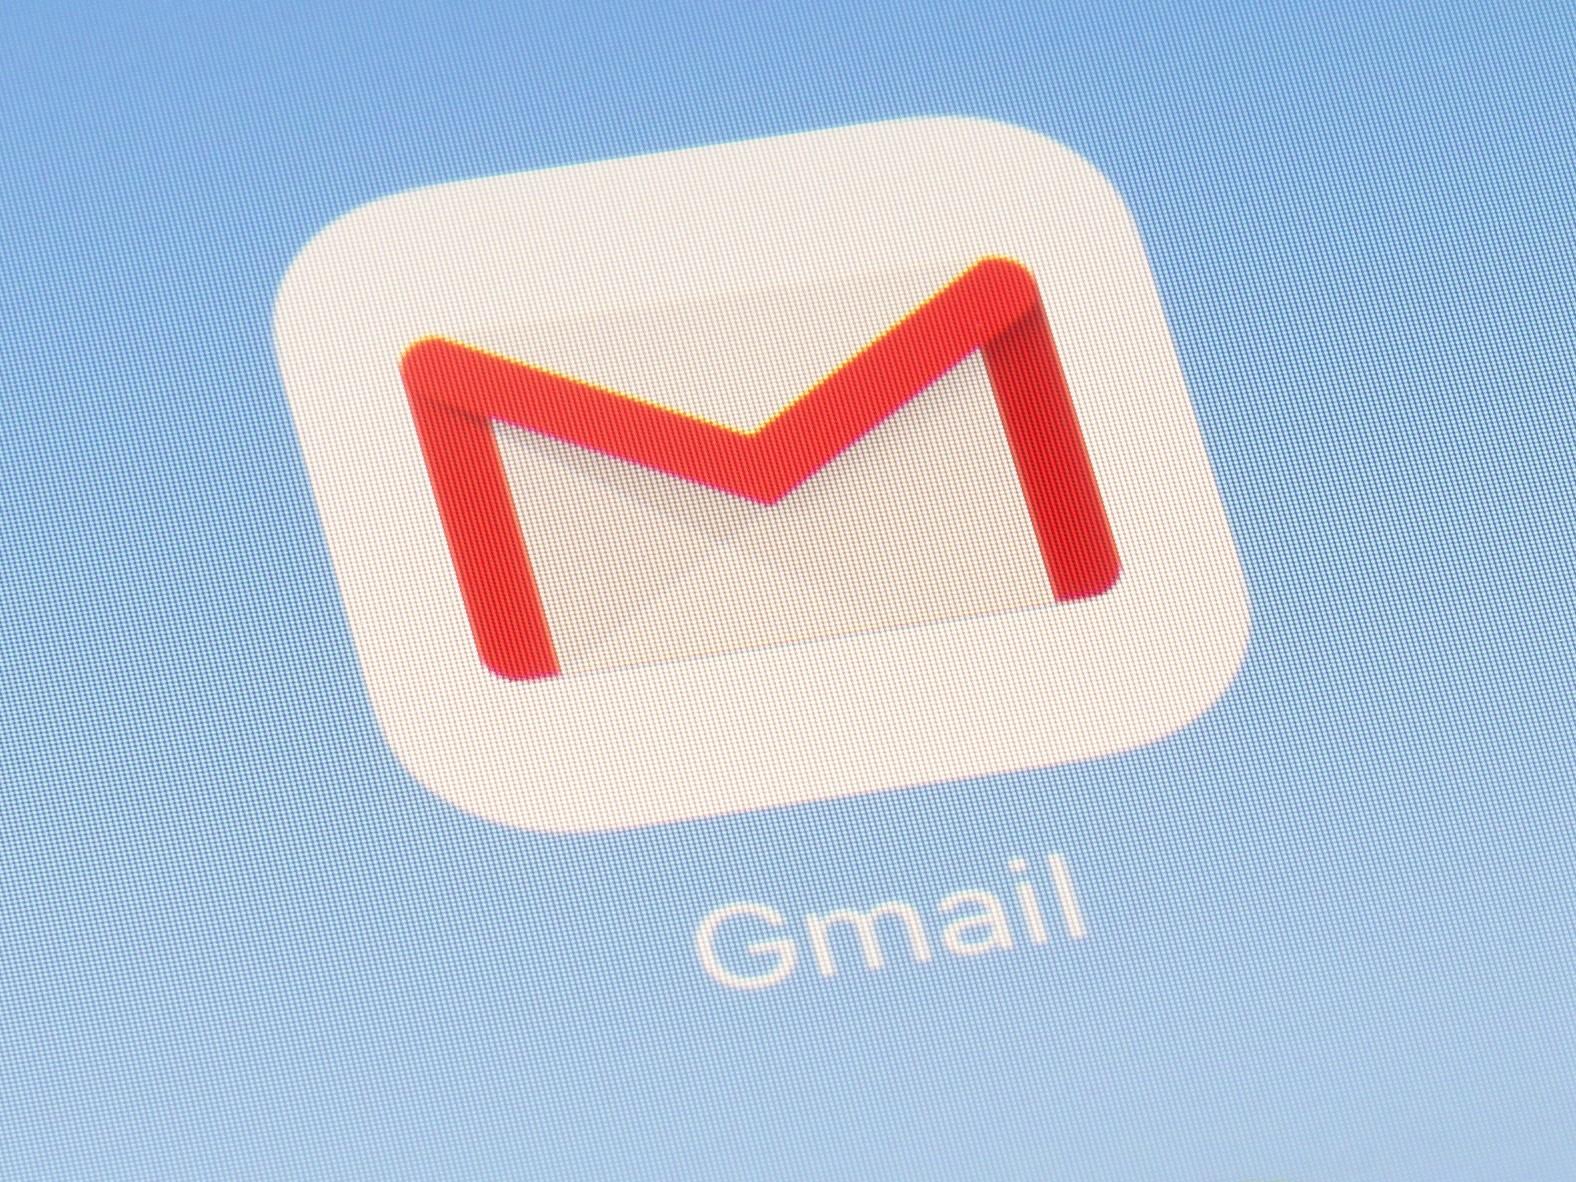 Gmail 24. Gmail картинка. Гмайл людей. Красивая картинка gmail.